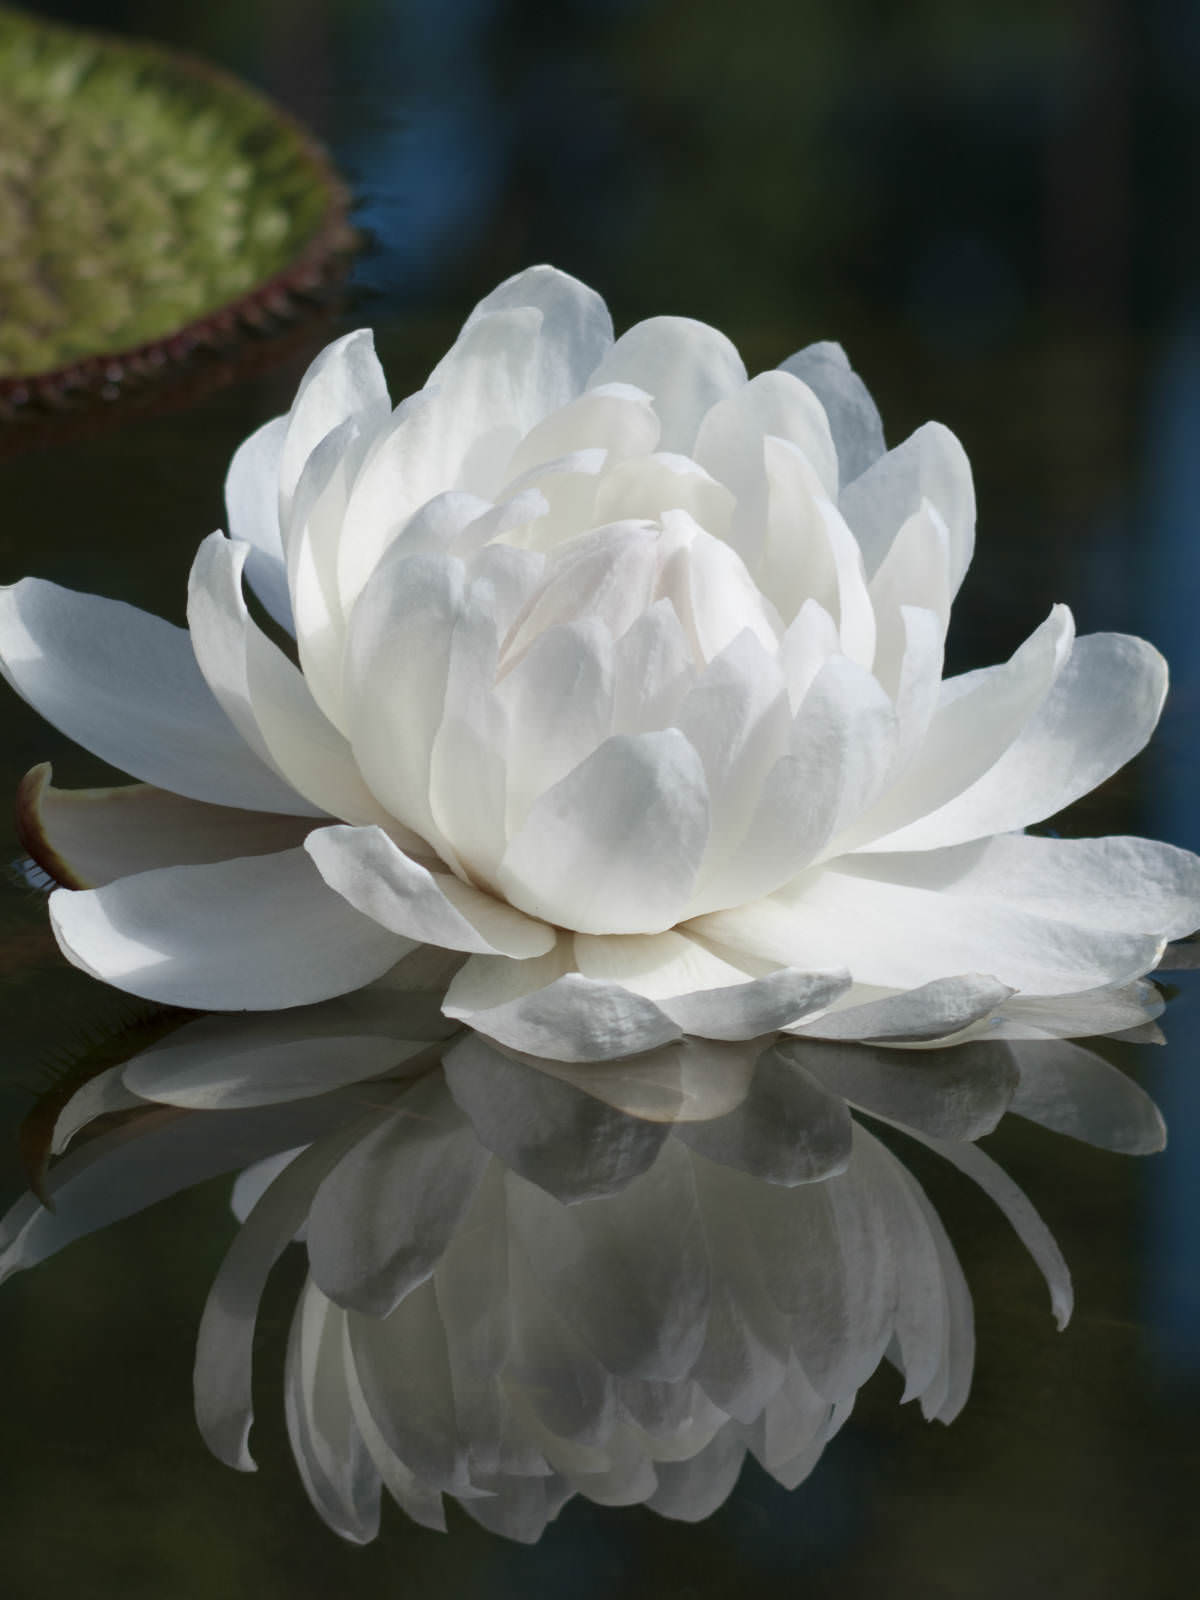 Victoria amazonica - Amazon Water Lily | World of Flowering Plants